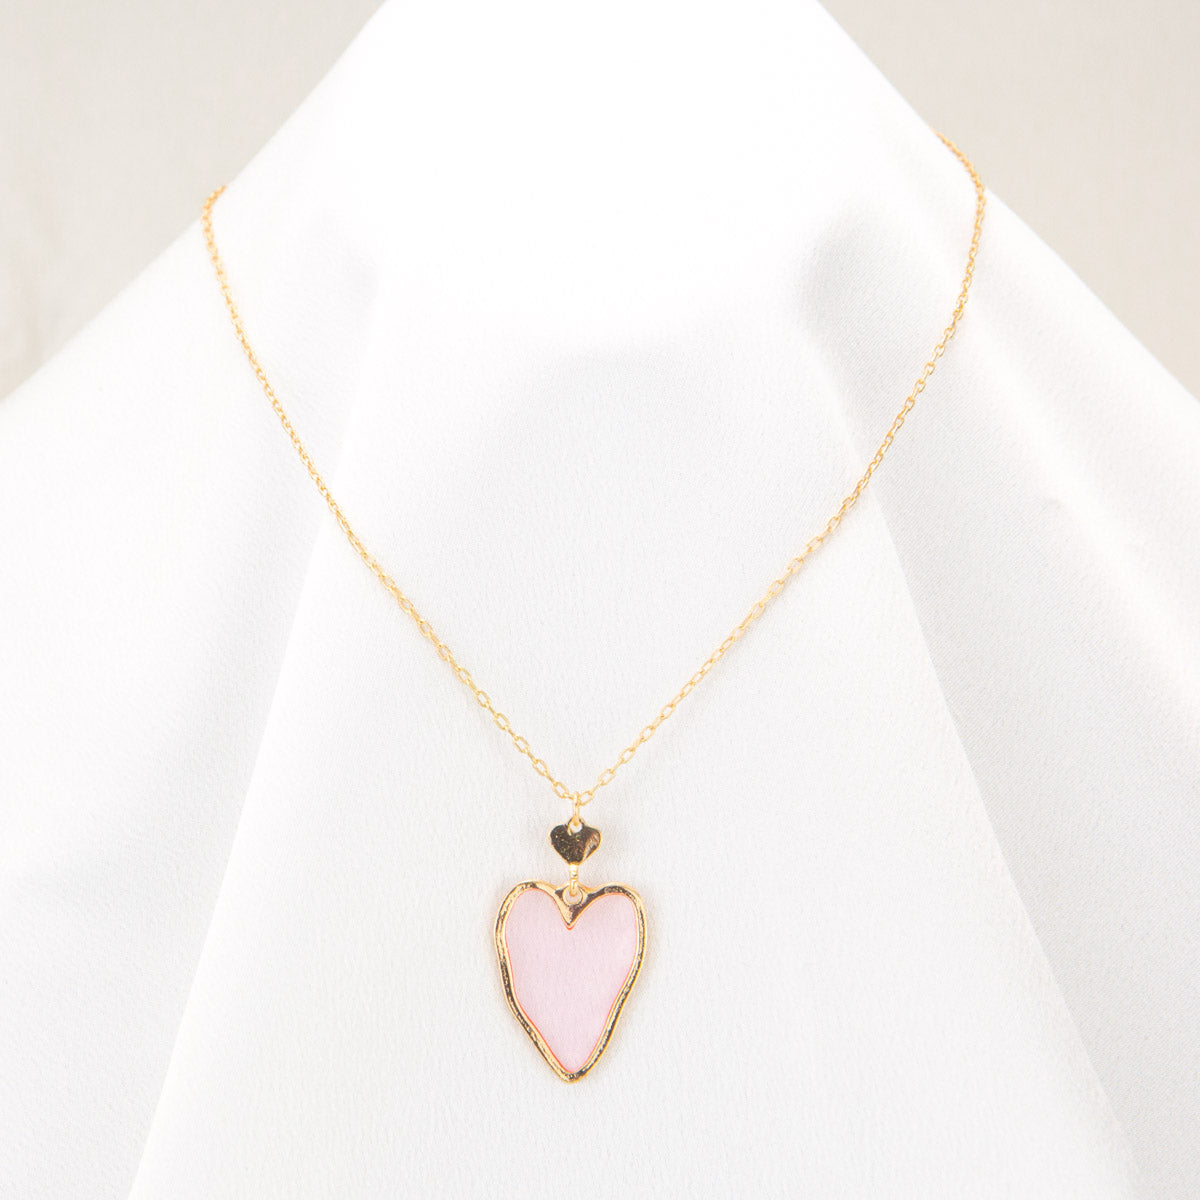 Devotion Heart Necklace in Pink